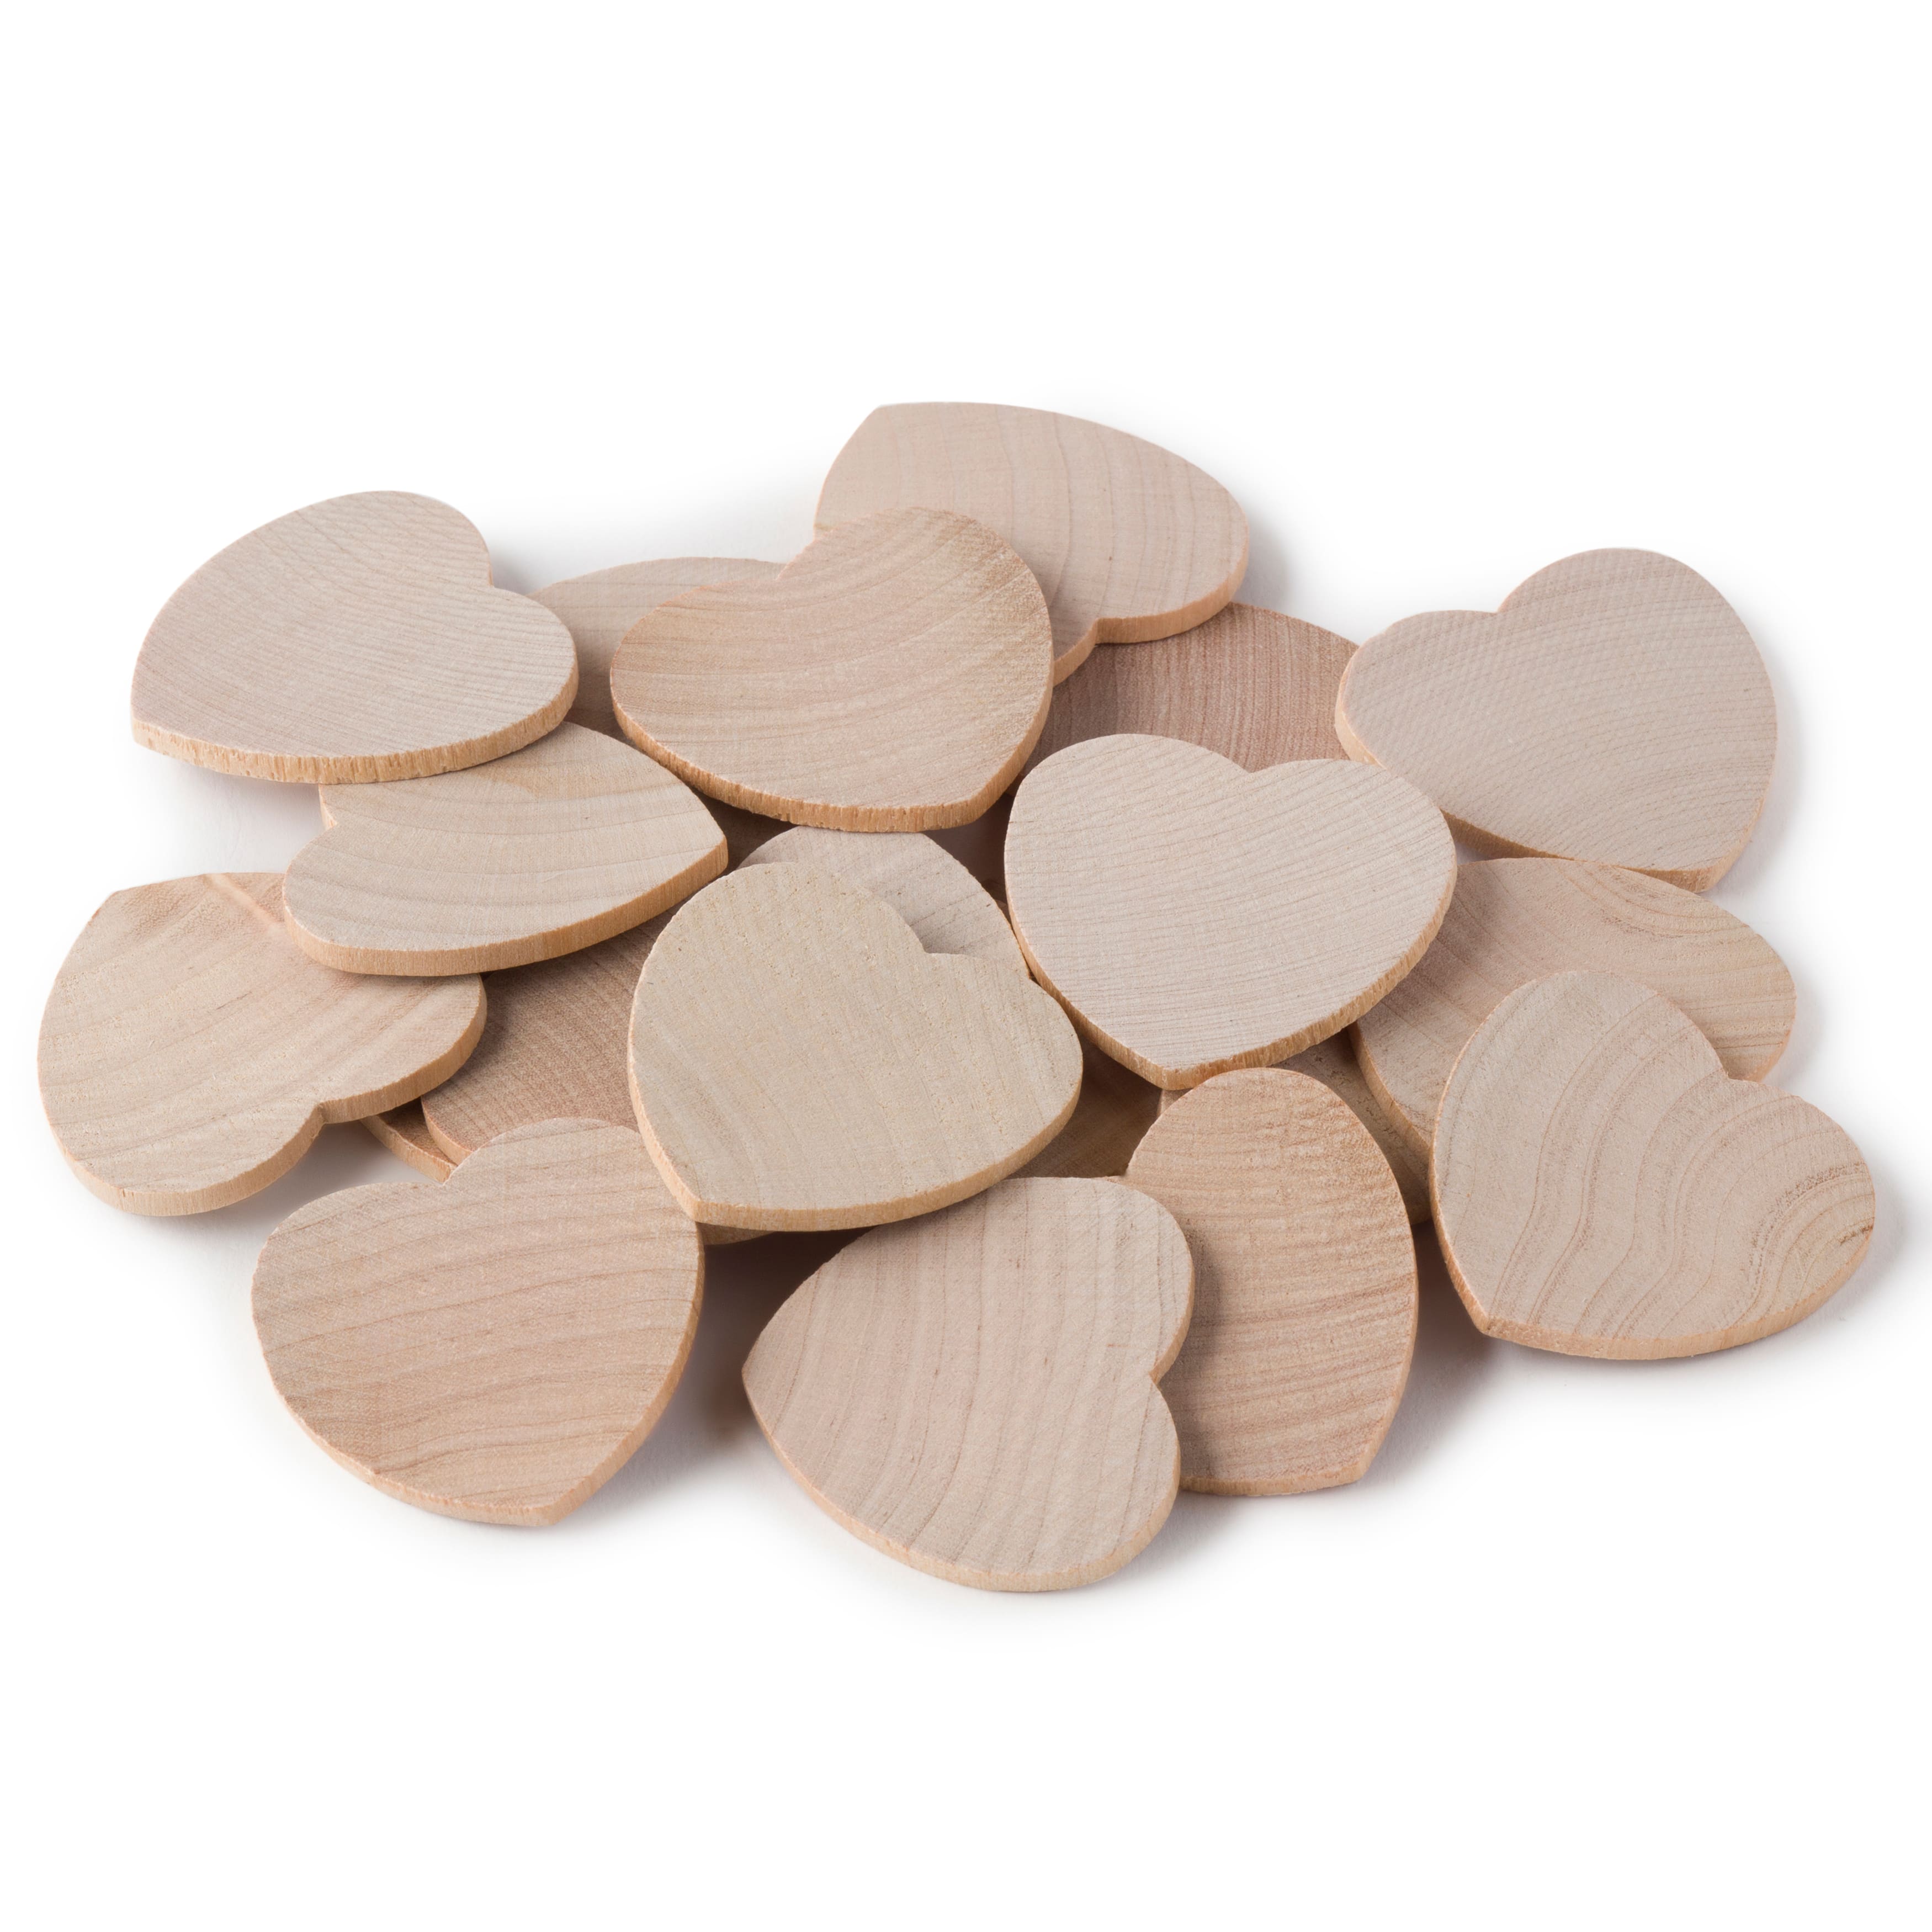 Unfinished Wooden Heart Crafts, Diy Wooden Heart Craft Ideas